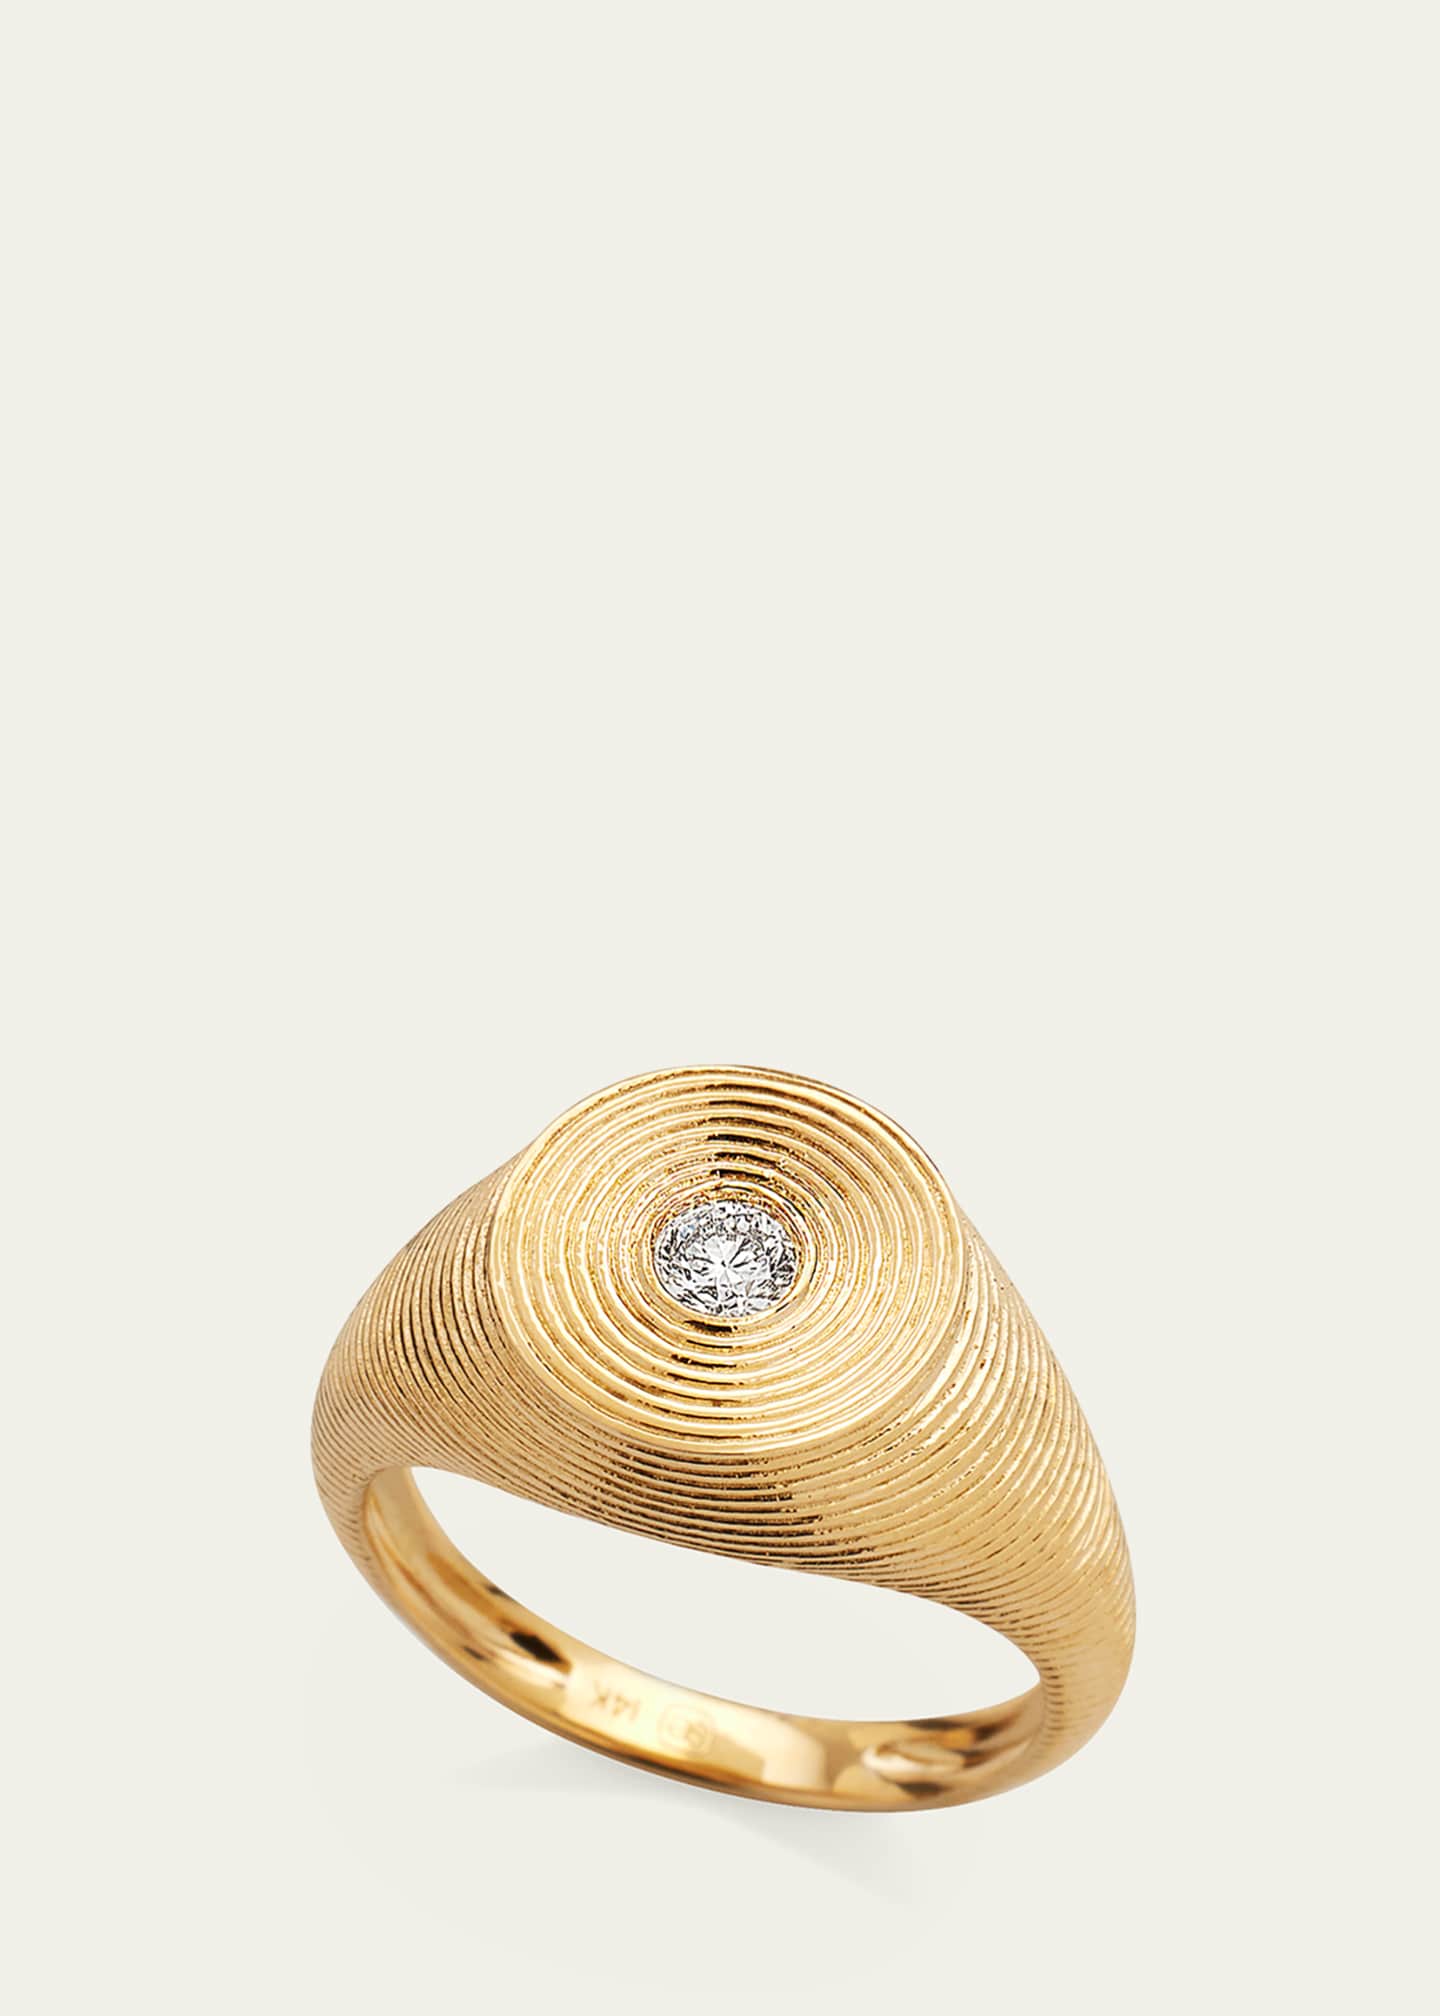 14k Gold Rings - Sydney Evan